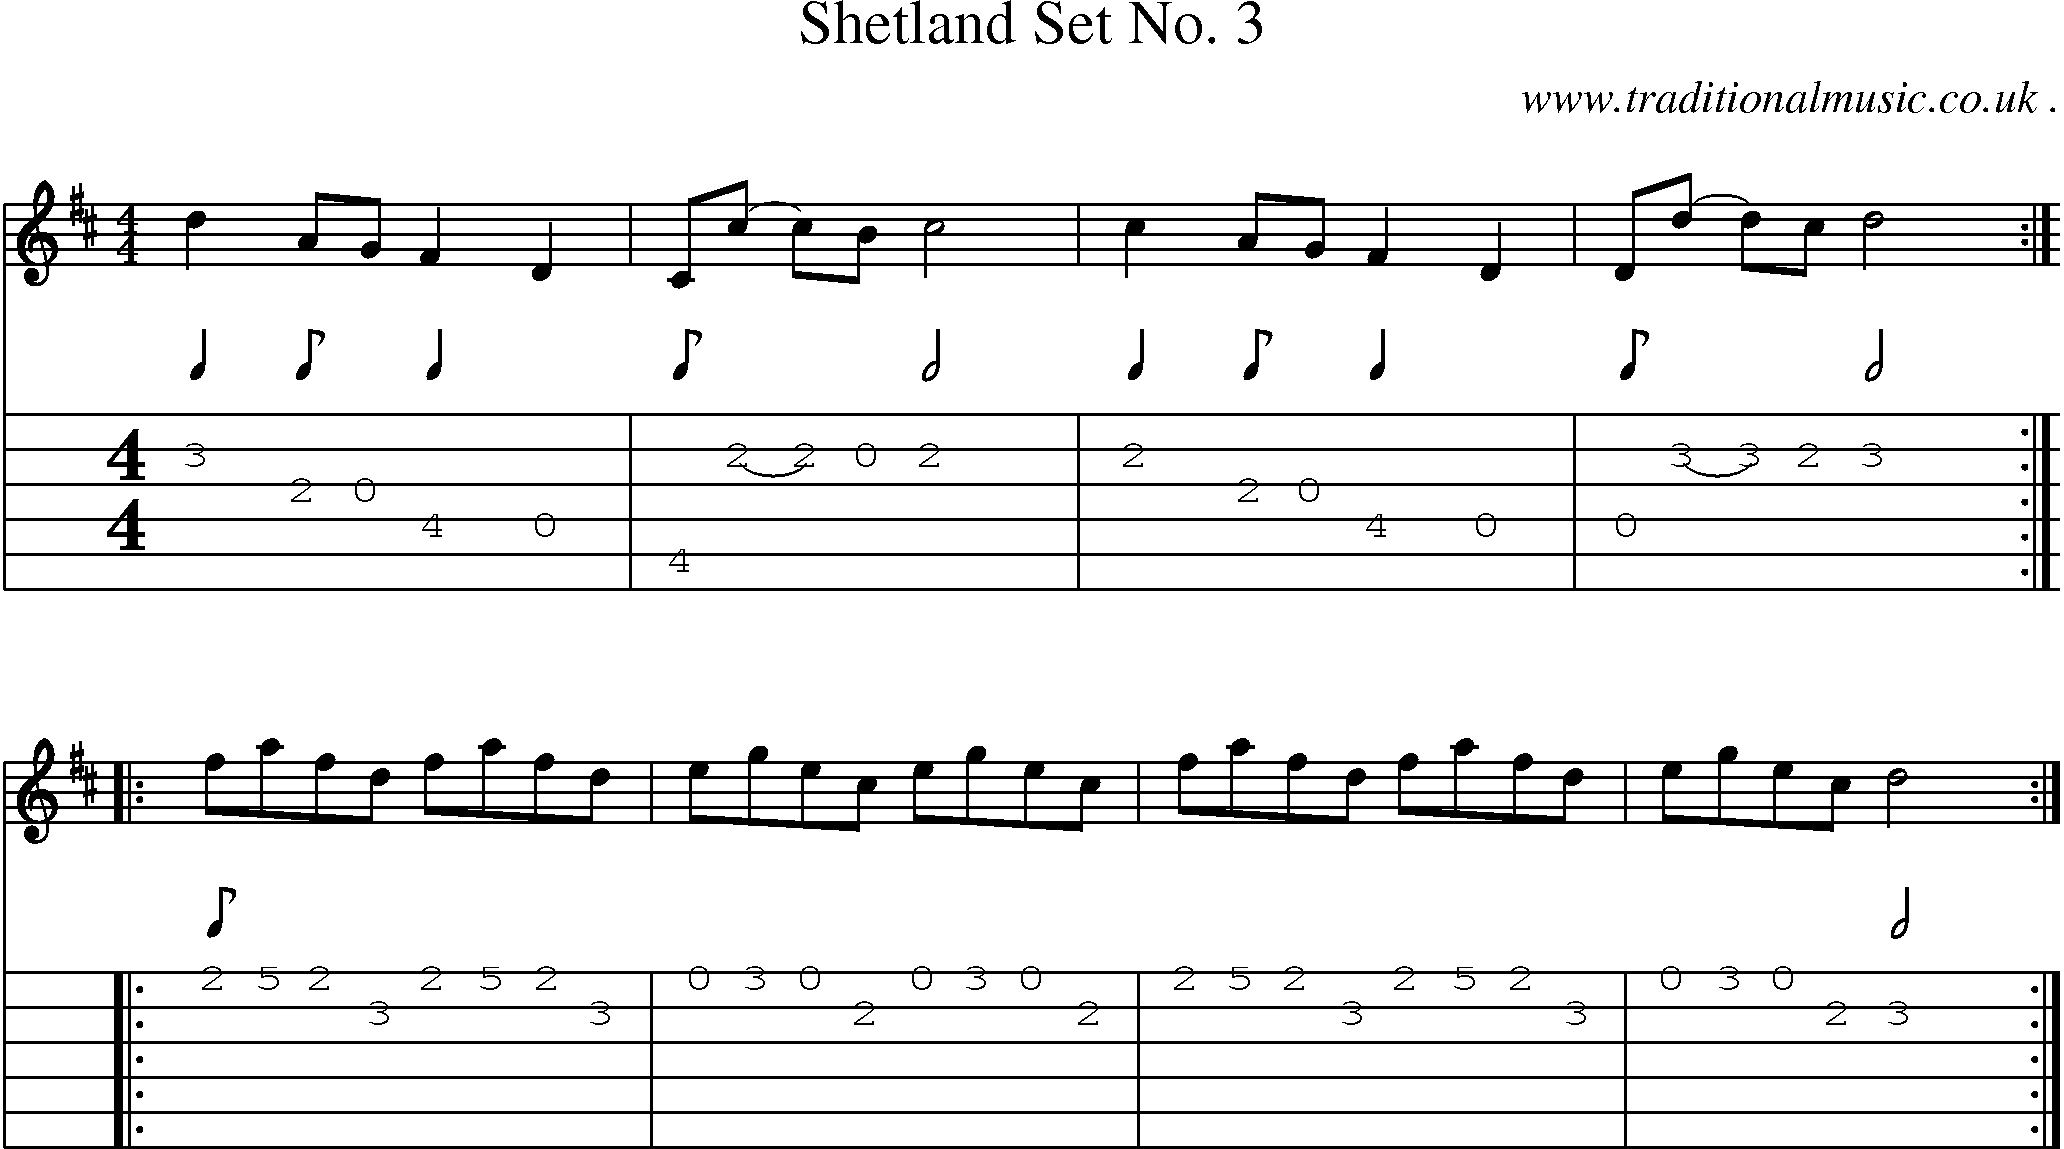 Sheet-Music and Guitar Tabs for Shetland Set No 3